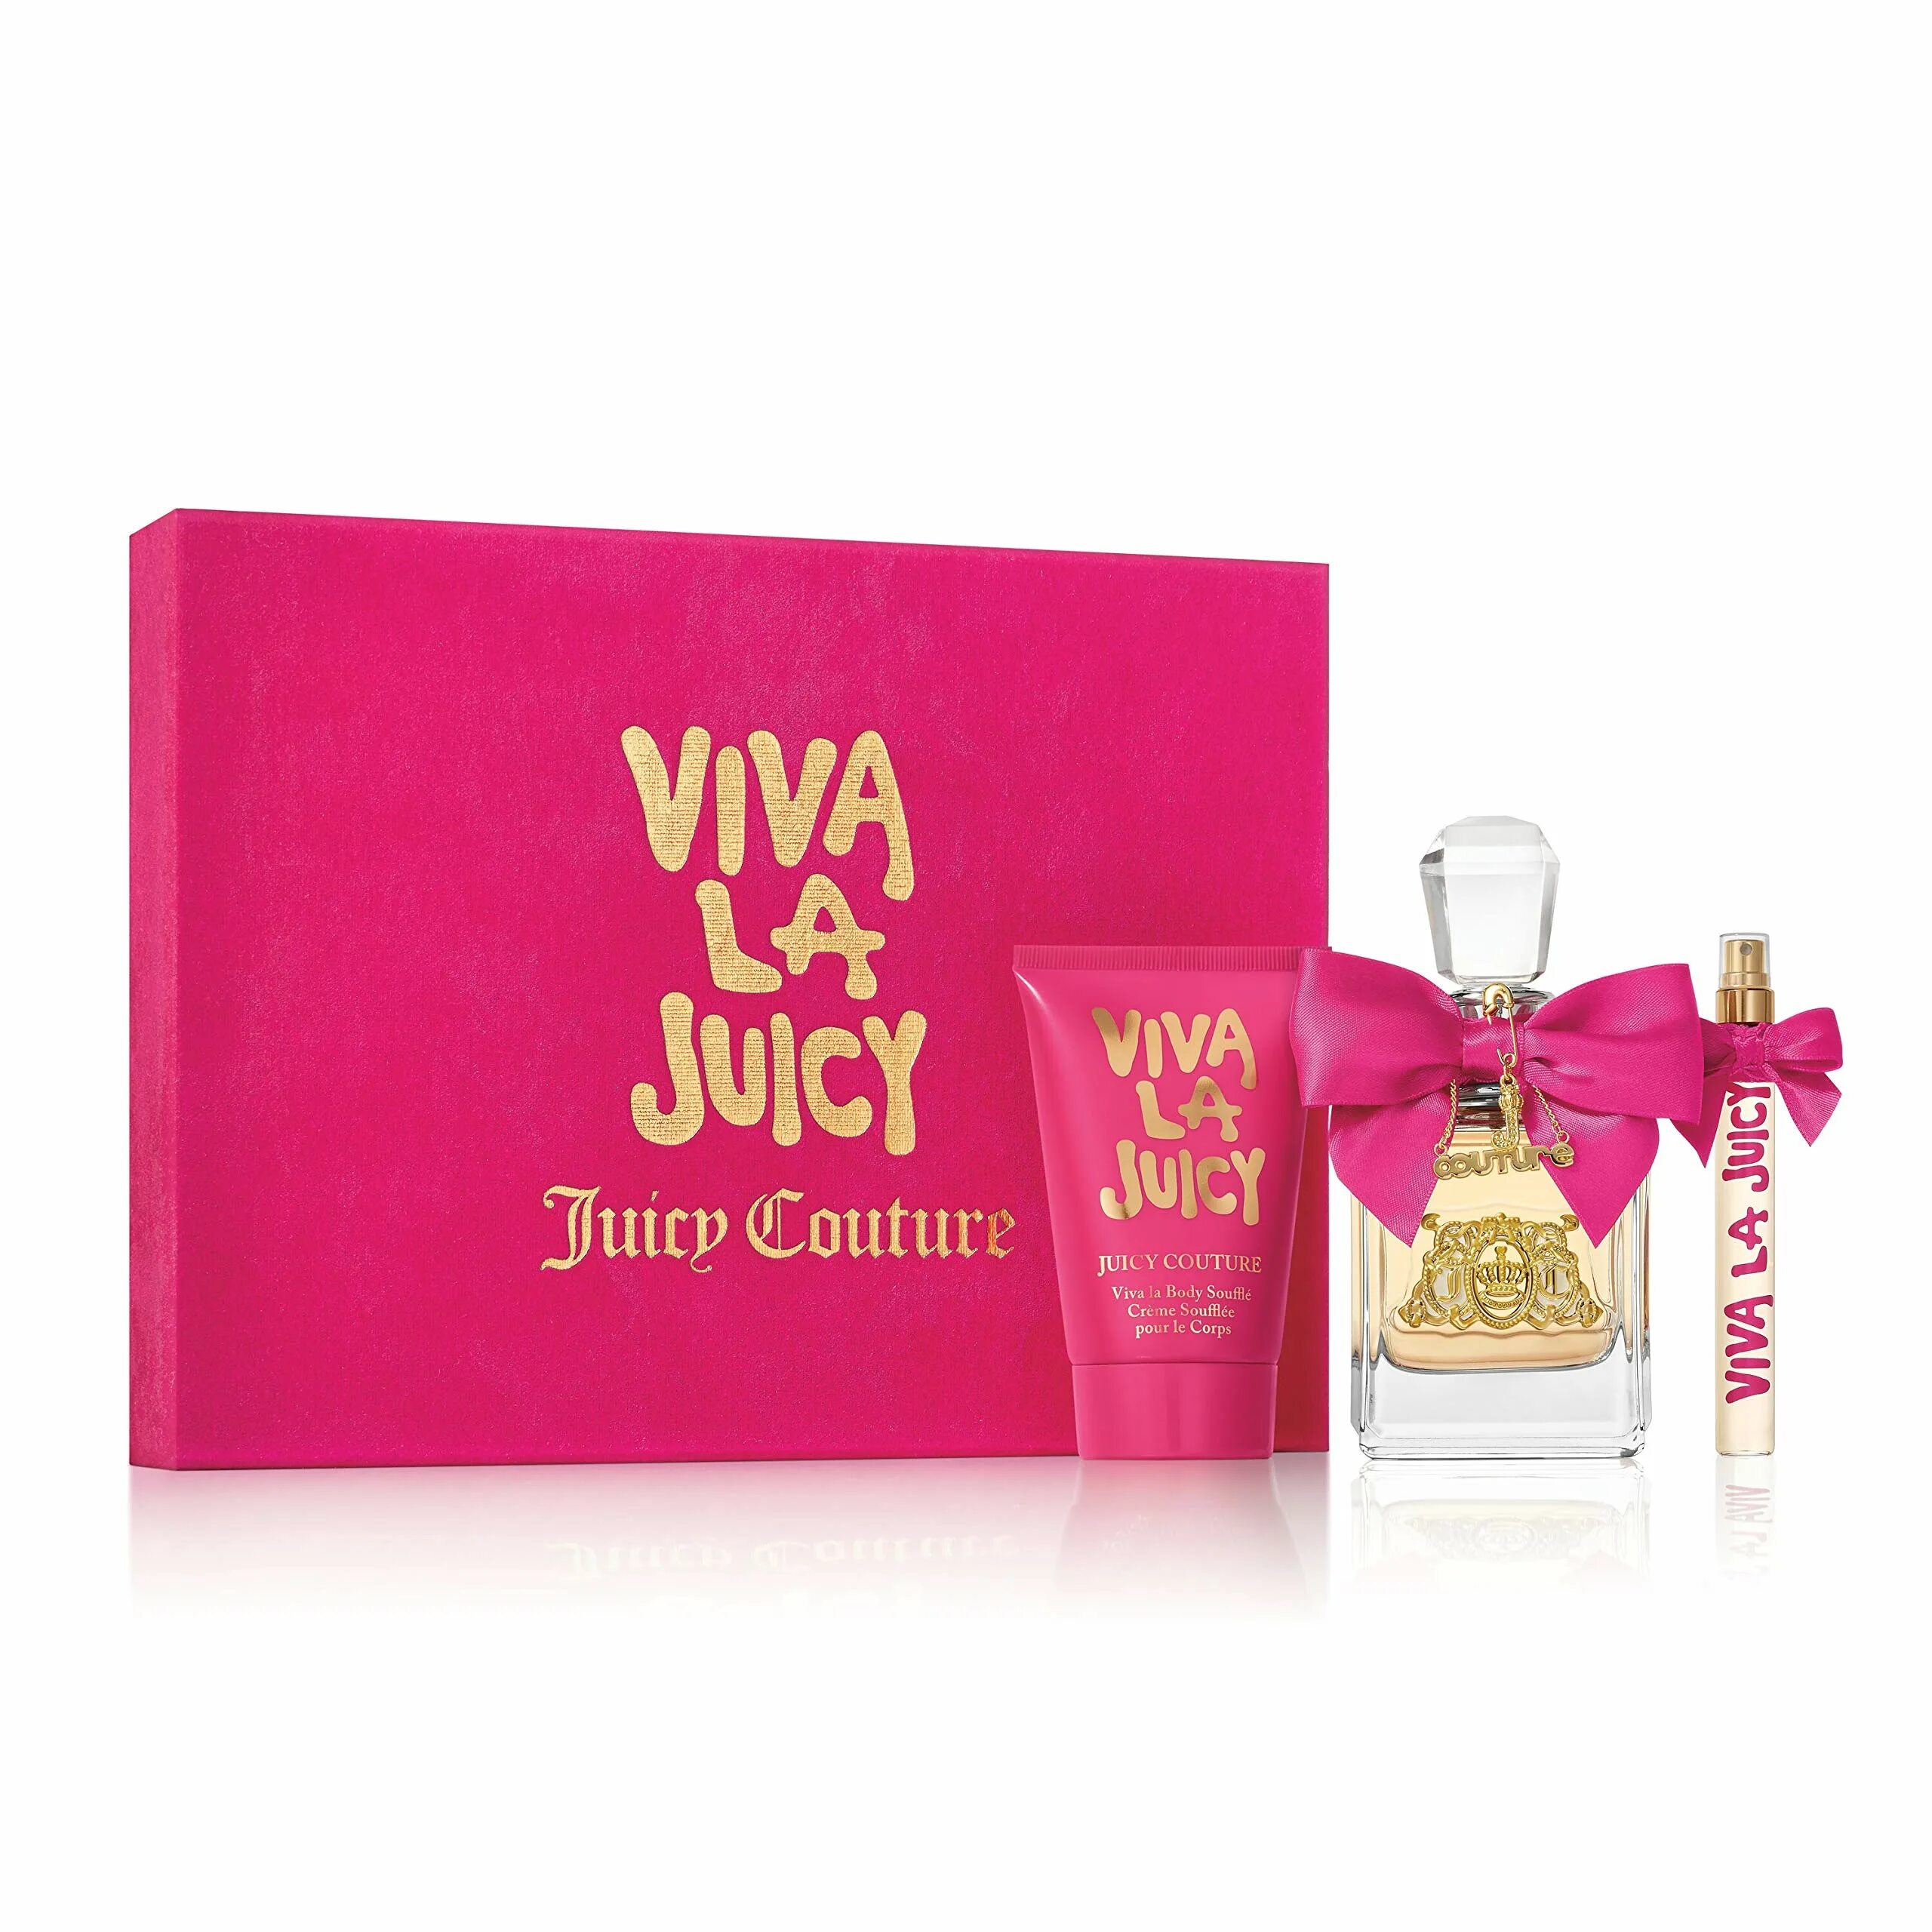 Viva couture. Juicy Couture Fragrance парфюмерия. Viva la juicy духи. Комплект Джуси Кутюр. Viva la juicy 8 мл.